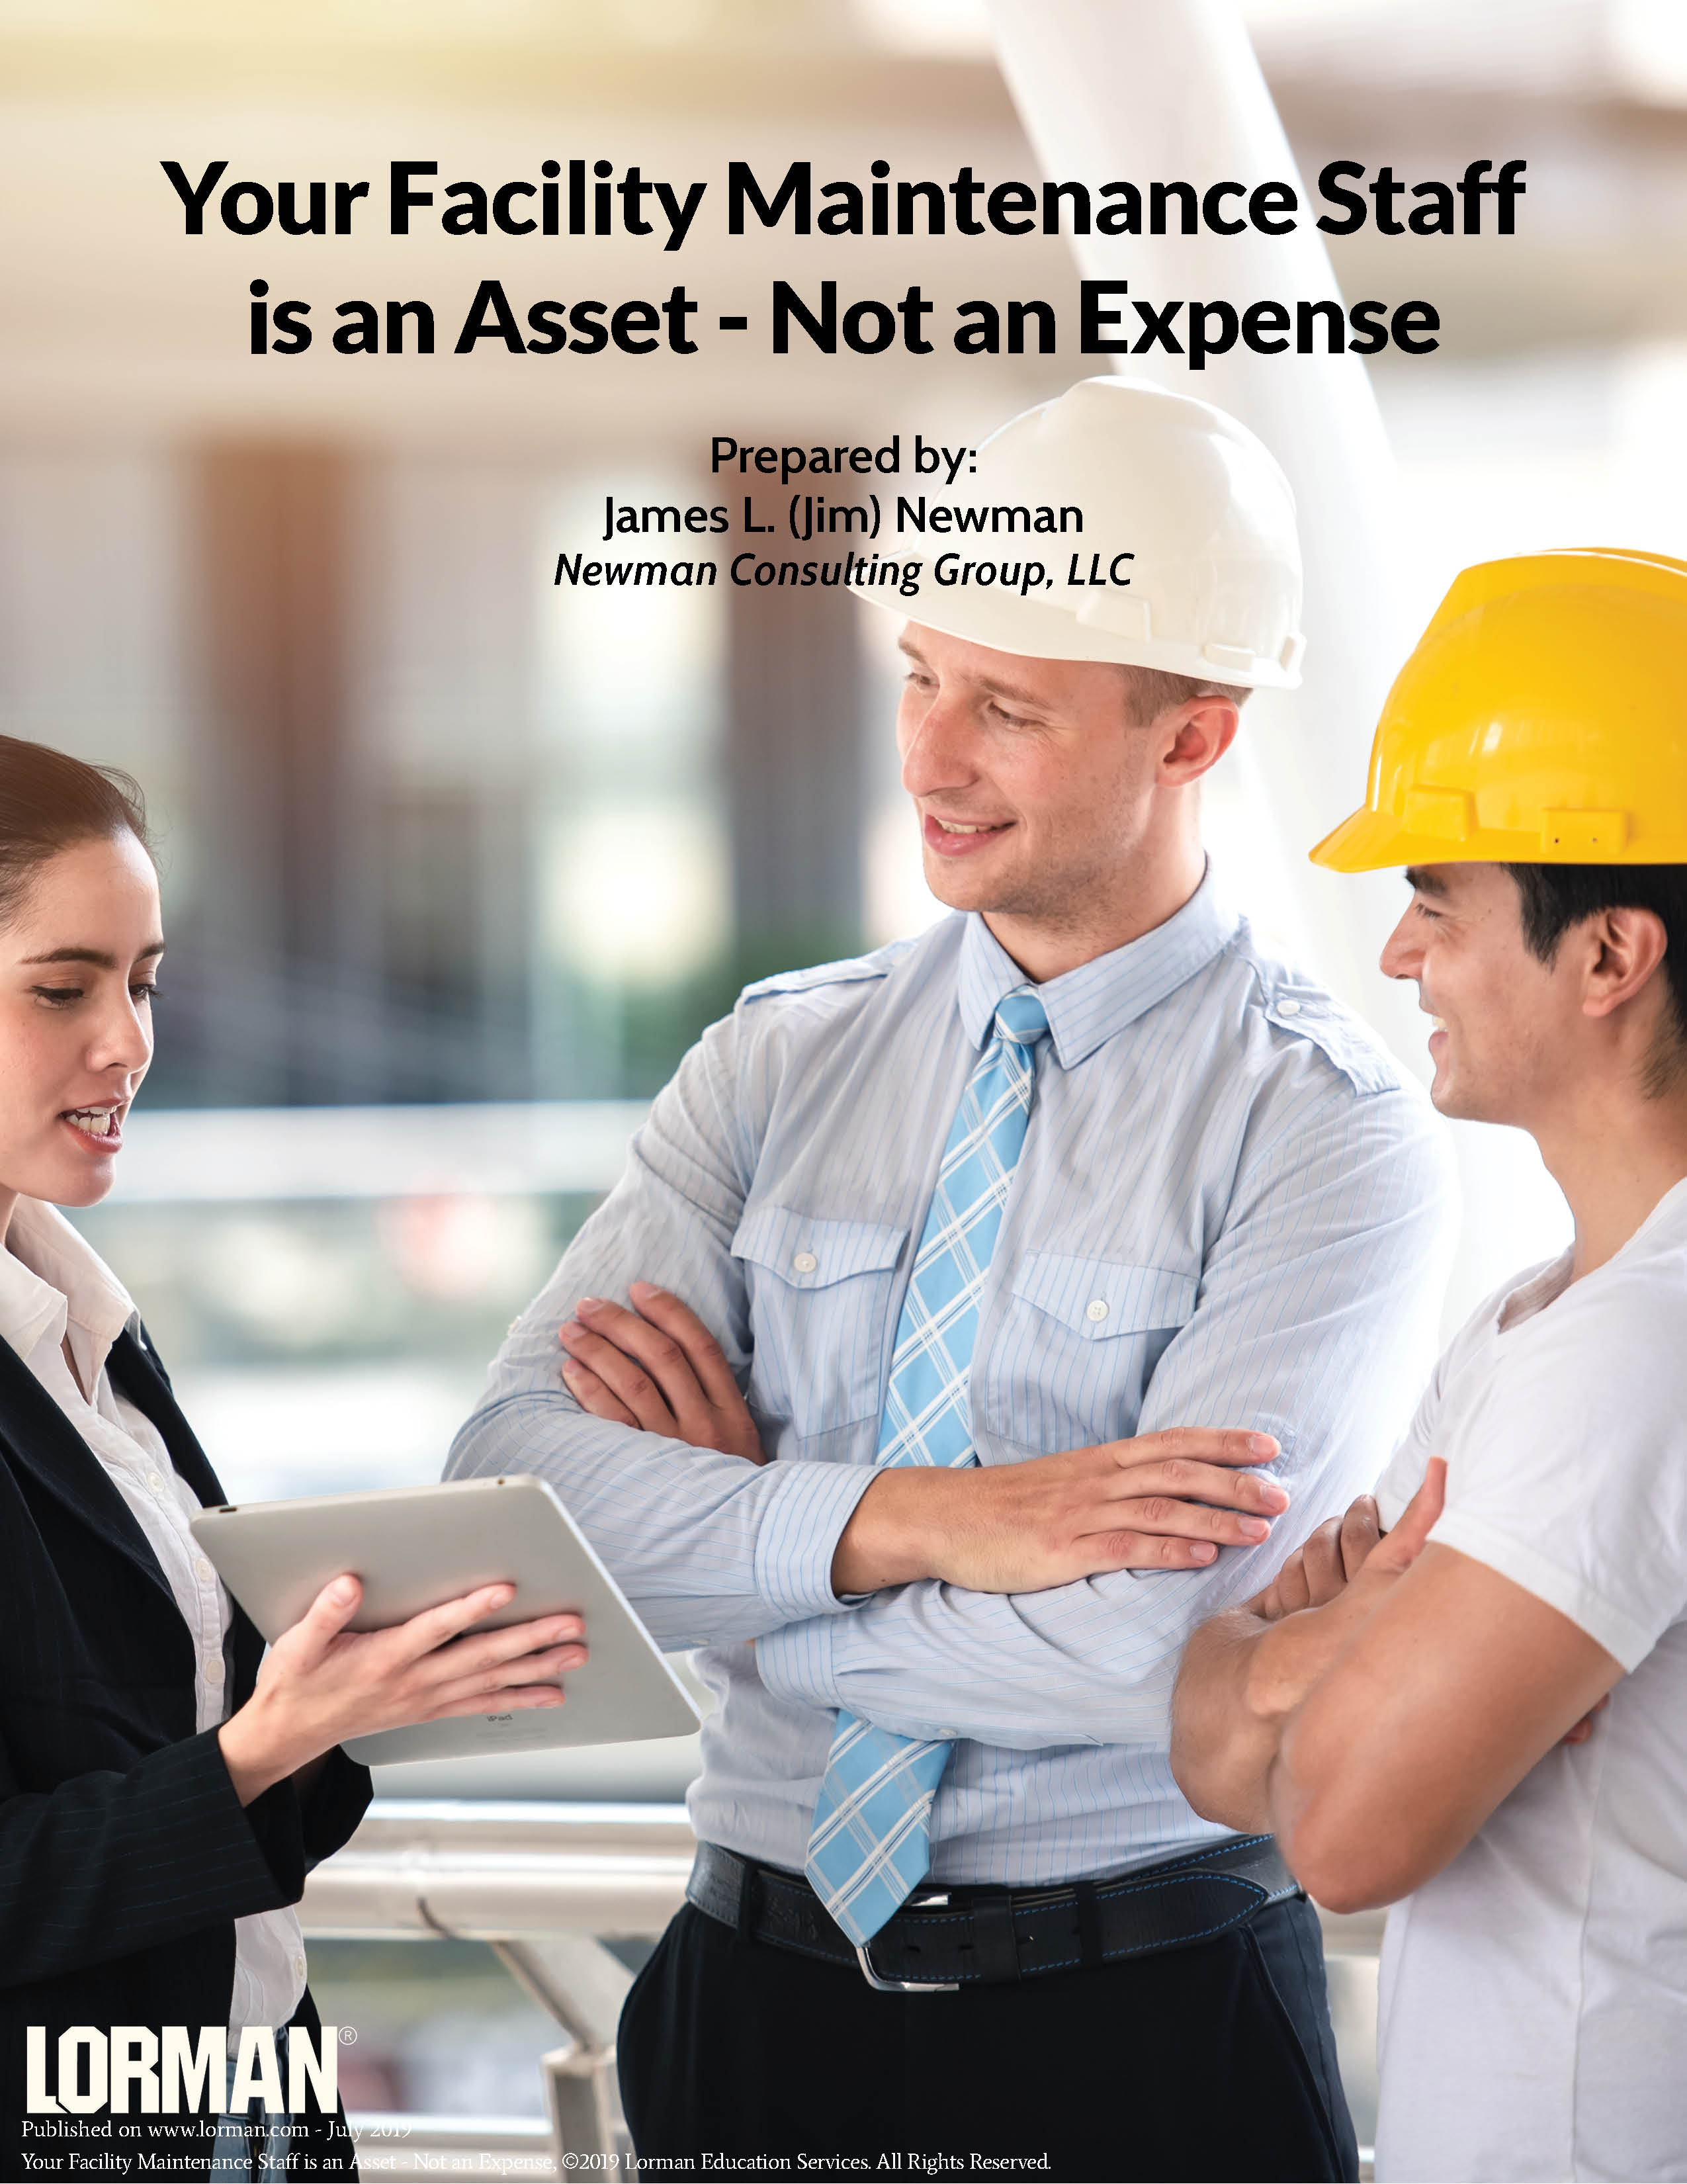 Your Facility Maintenance Staff is an Asset - Not an Expense